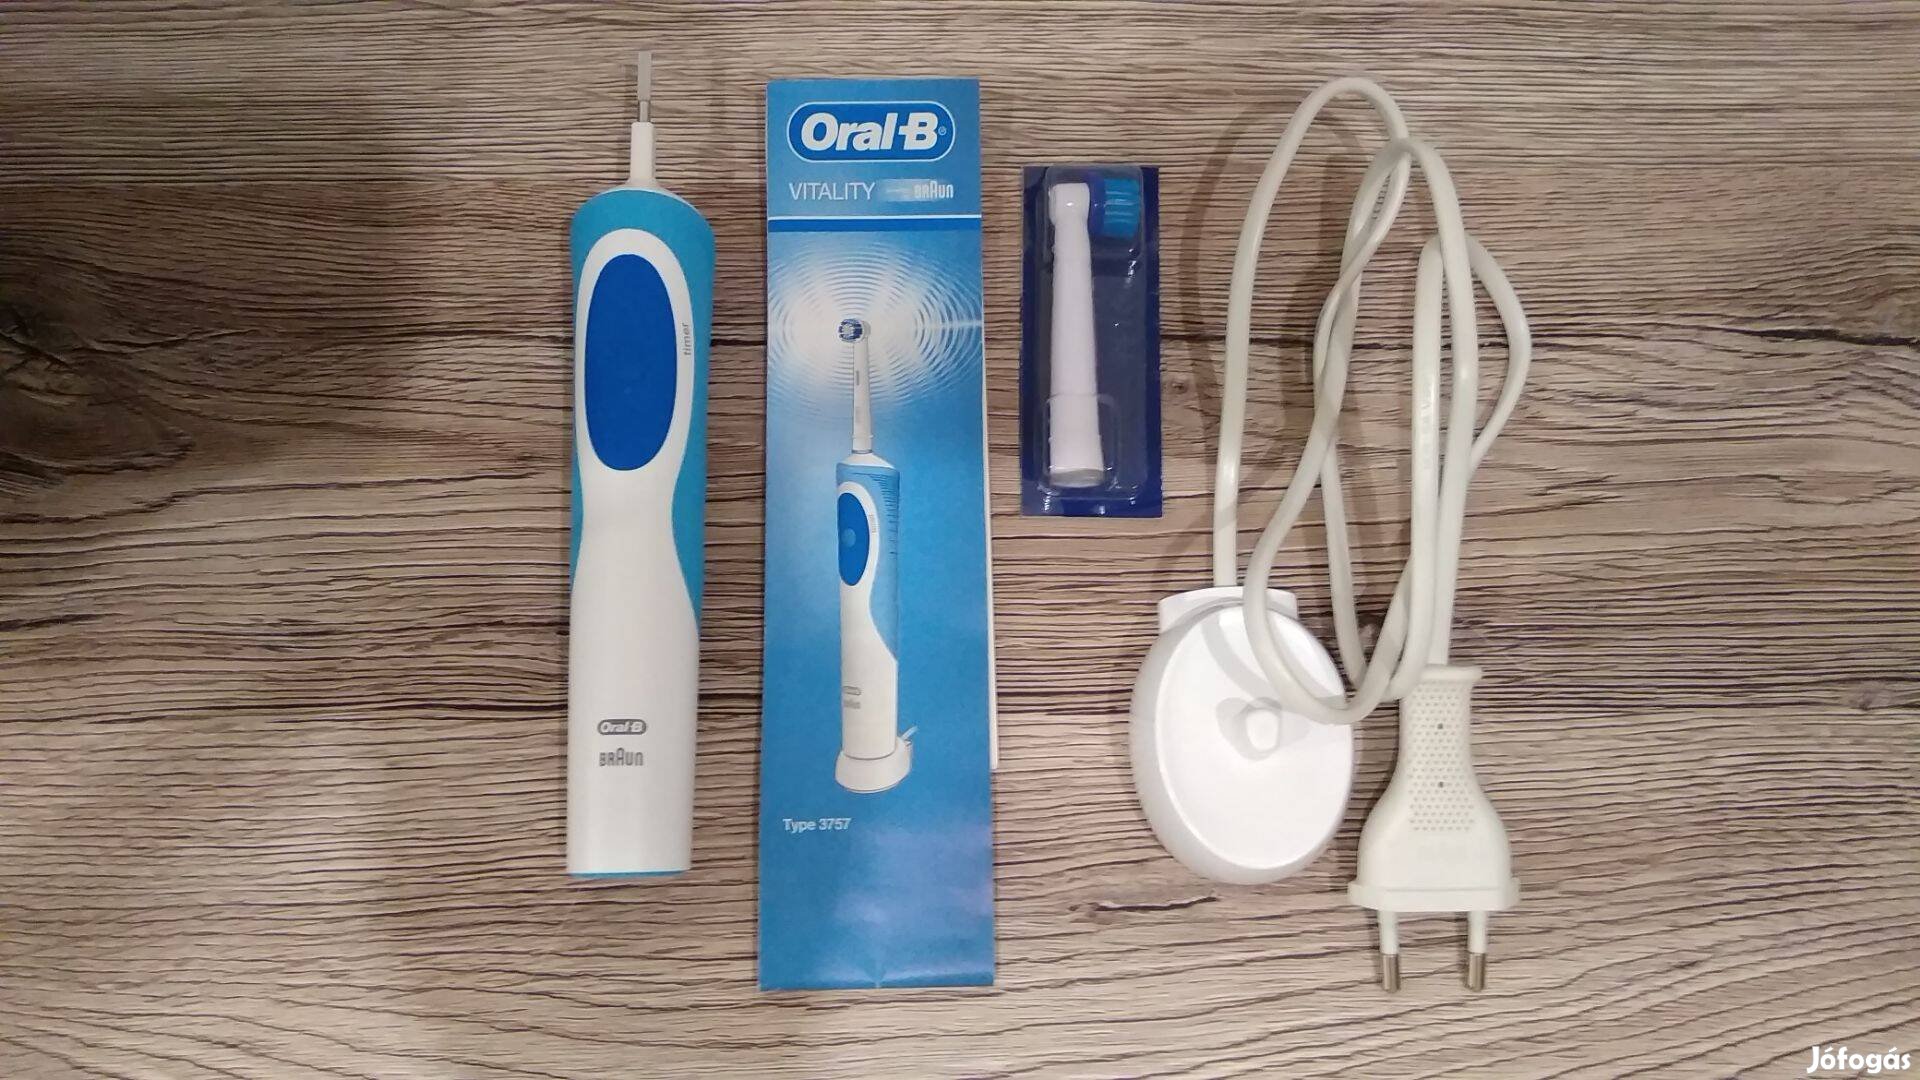 Újszerű állapotú Braun Oral-B elektromos fogkefe Oral B 3757 Vitality